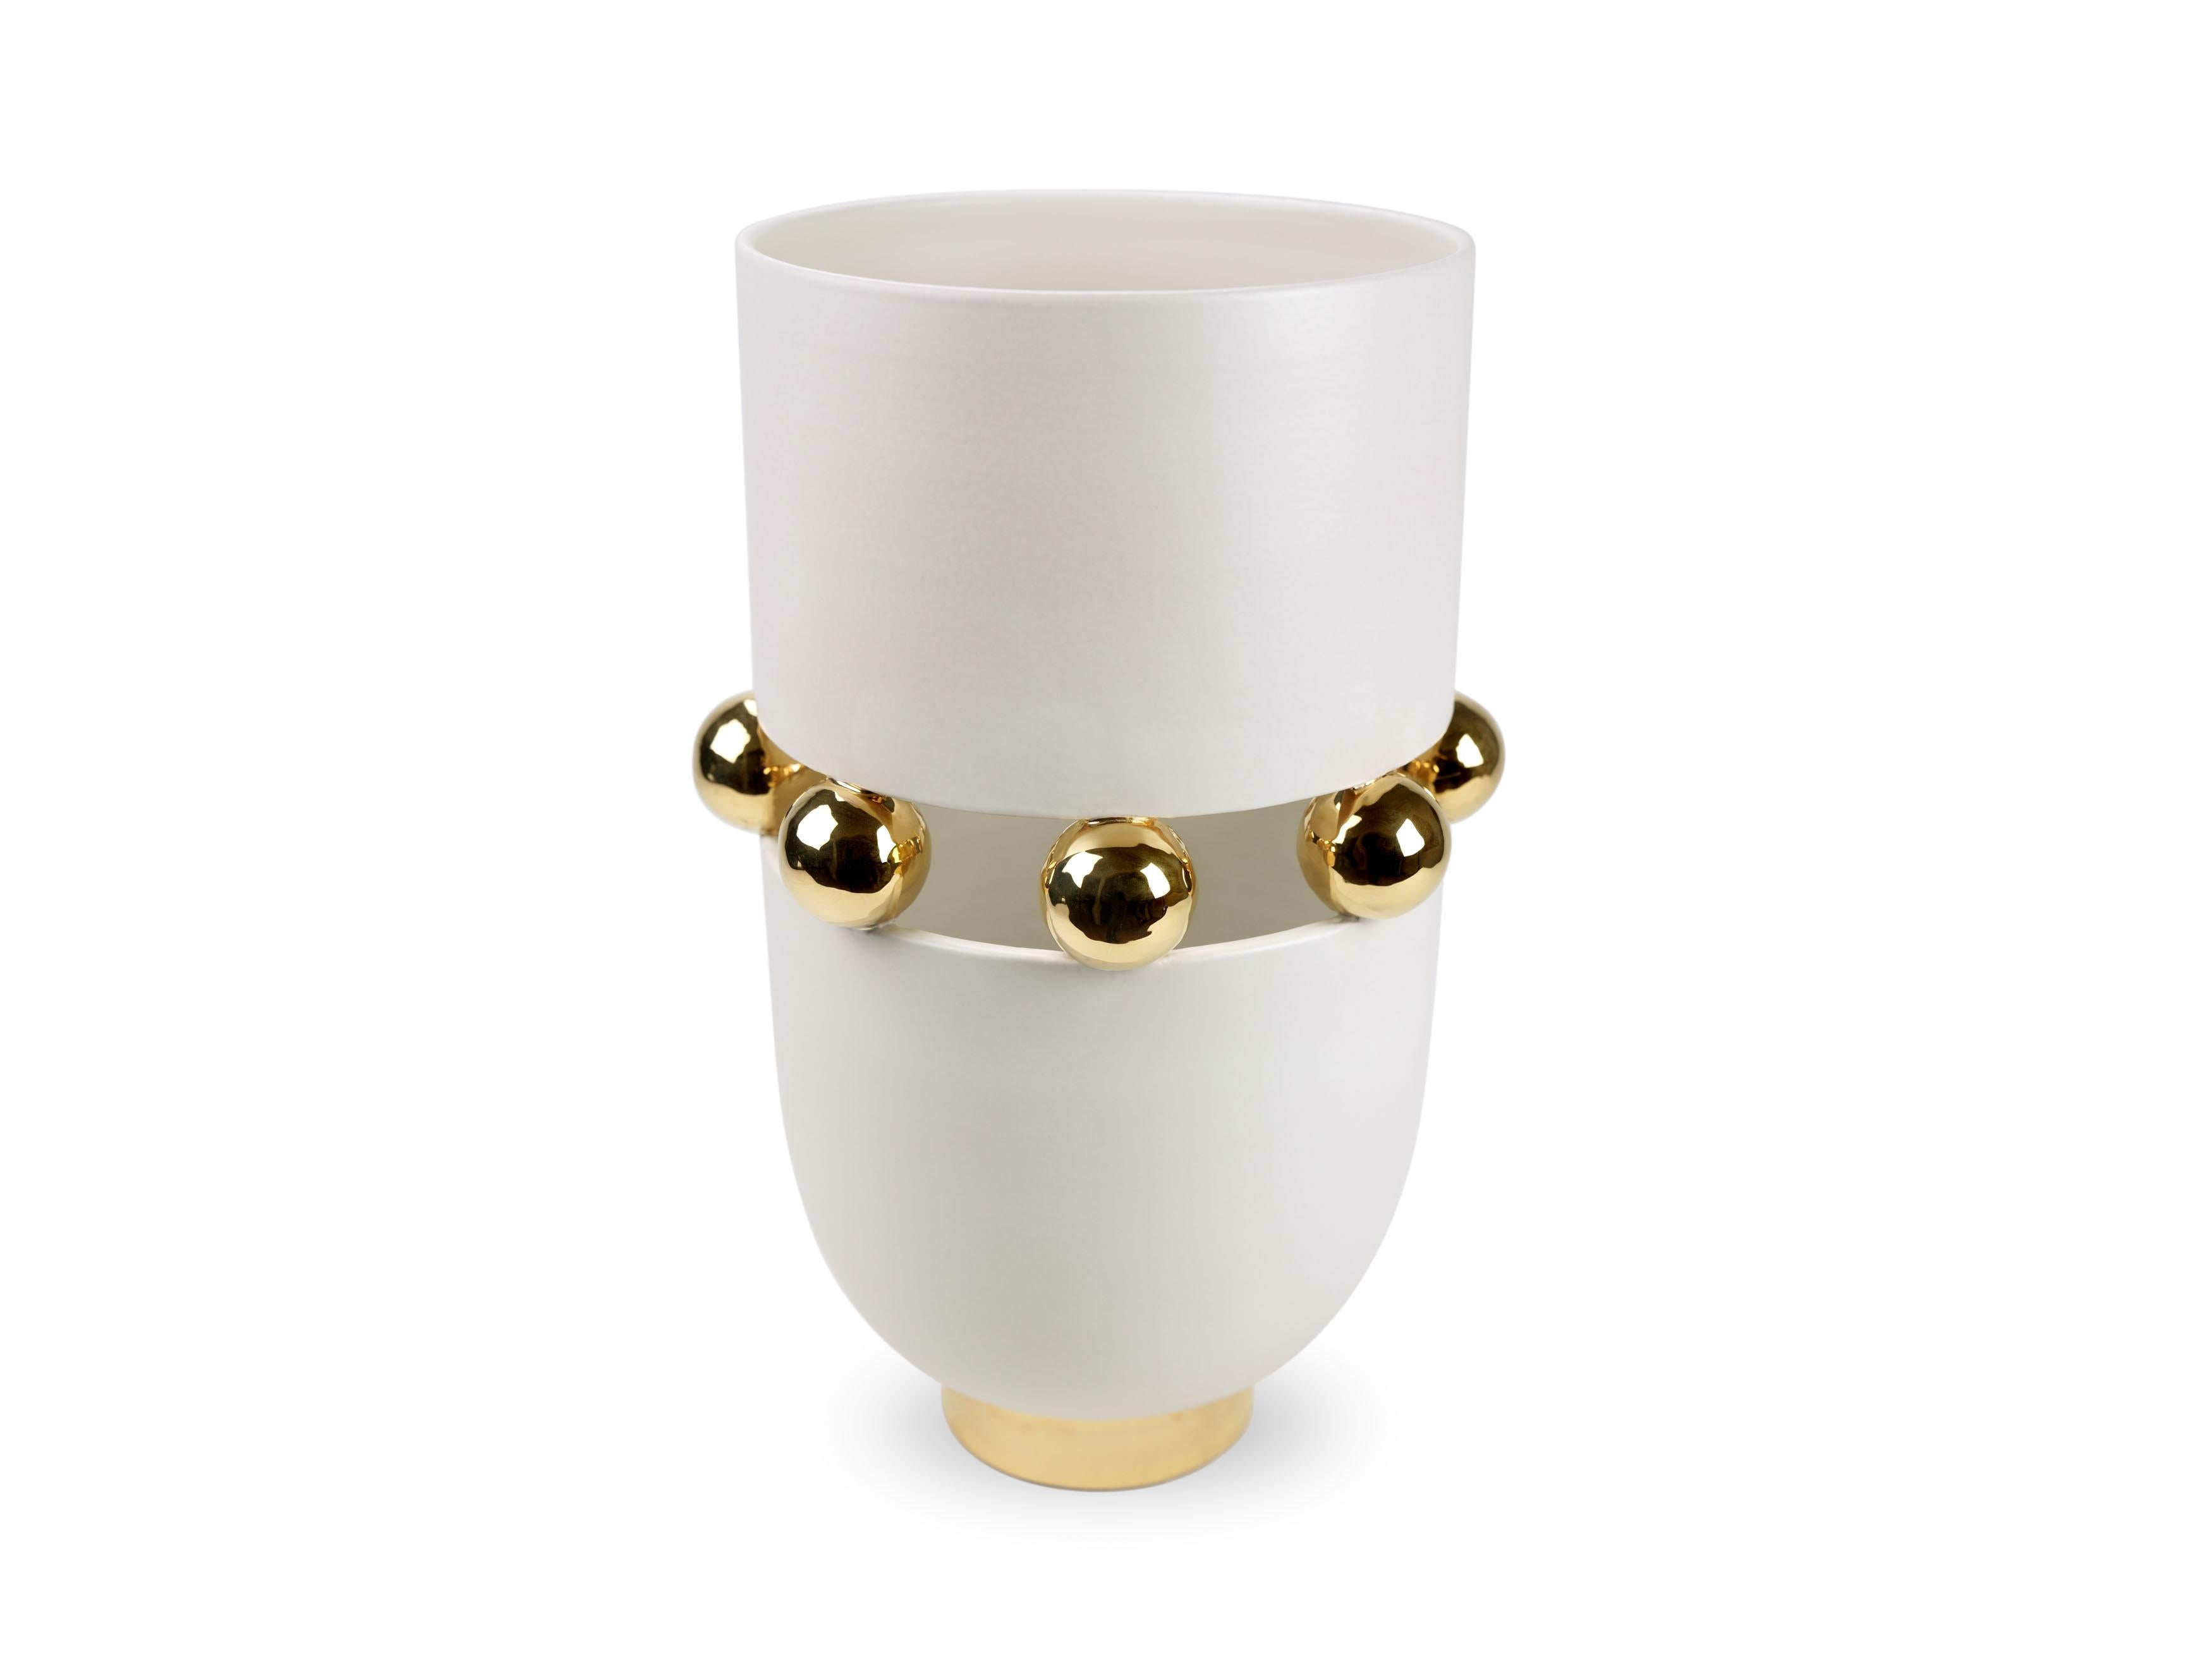 Contemporary Modern Vase, Matte Finish Warm White, Spheres 24kt Gold Luster, Handmade Italy For Sale